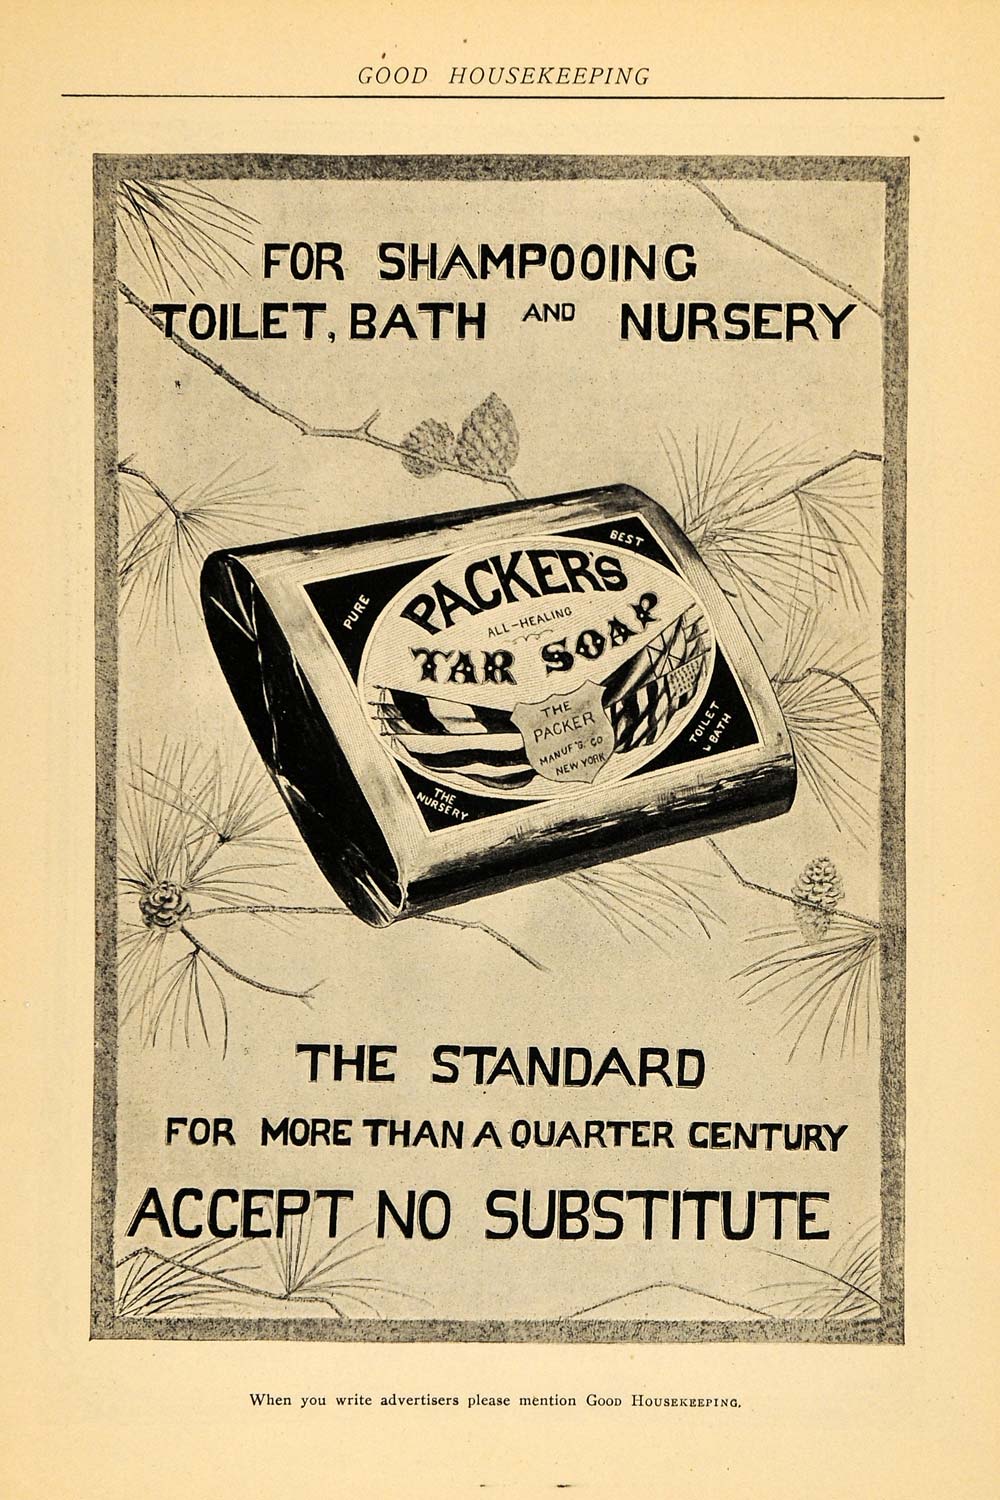 1902 Ad Packer's Tar Soap Shampoo Toilet Bath Nursery - ORIGINAL ADVERTISING GH2